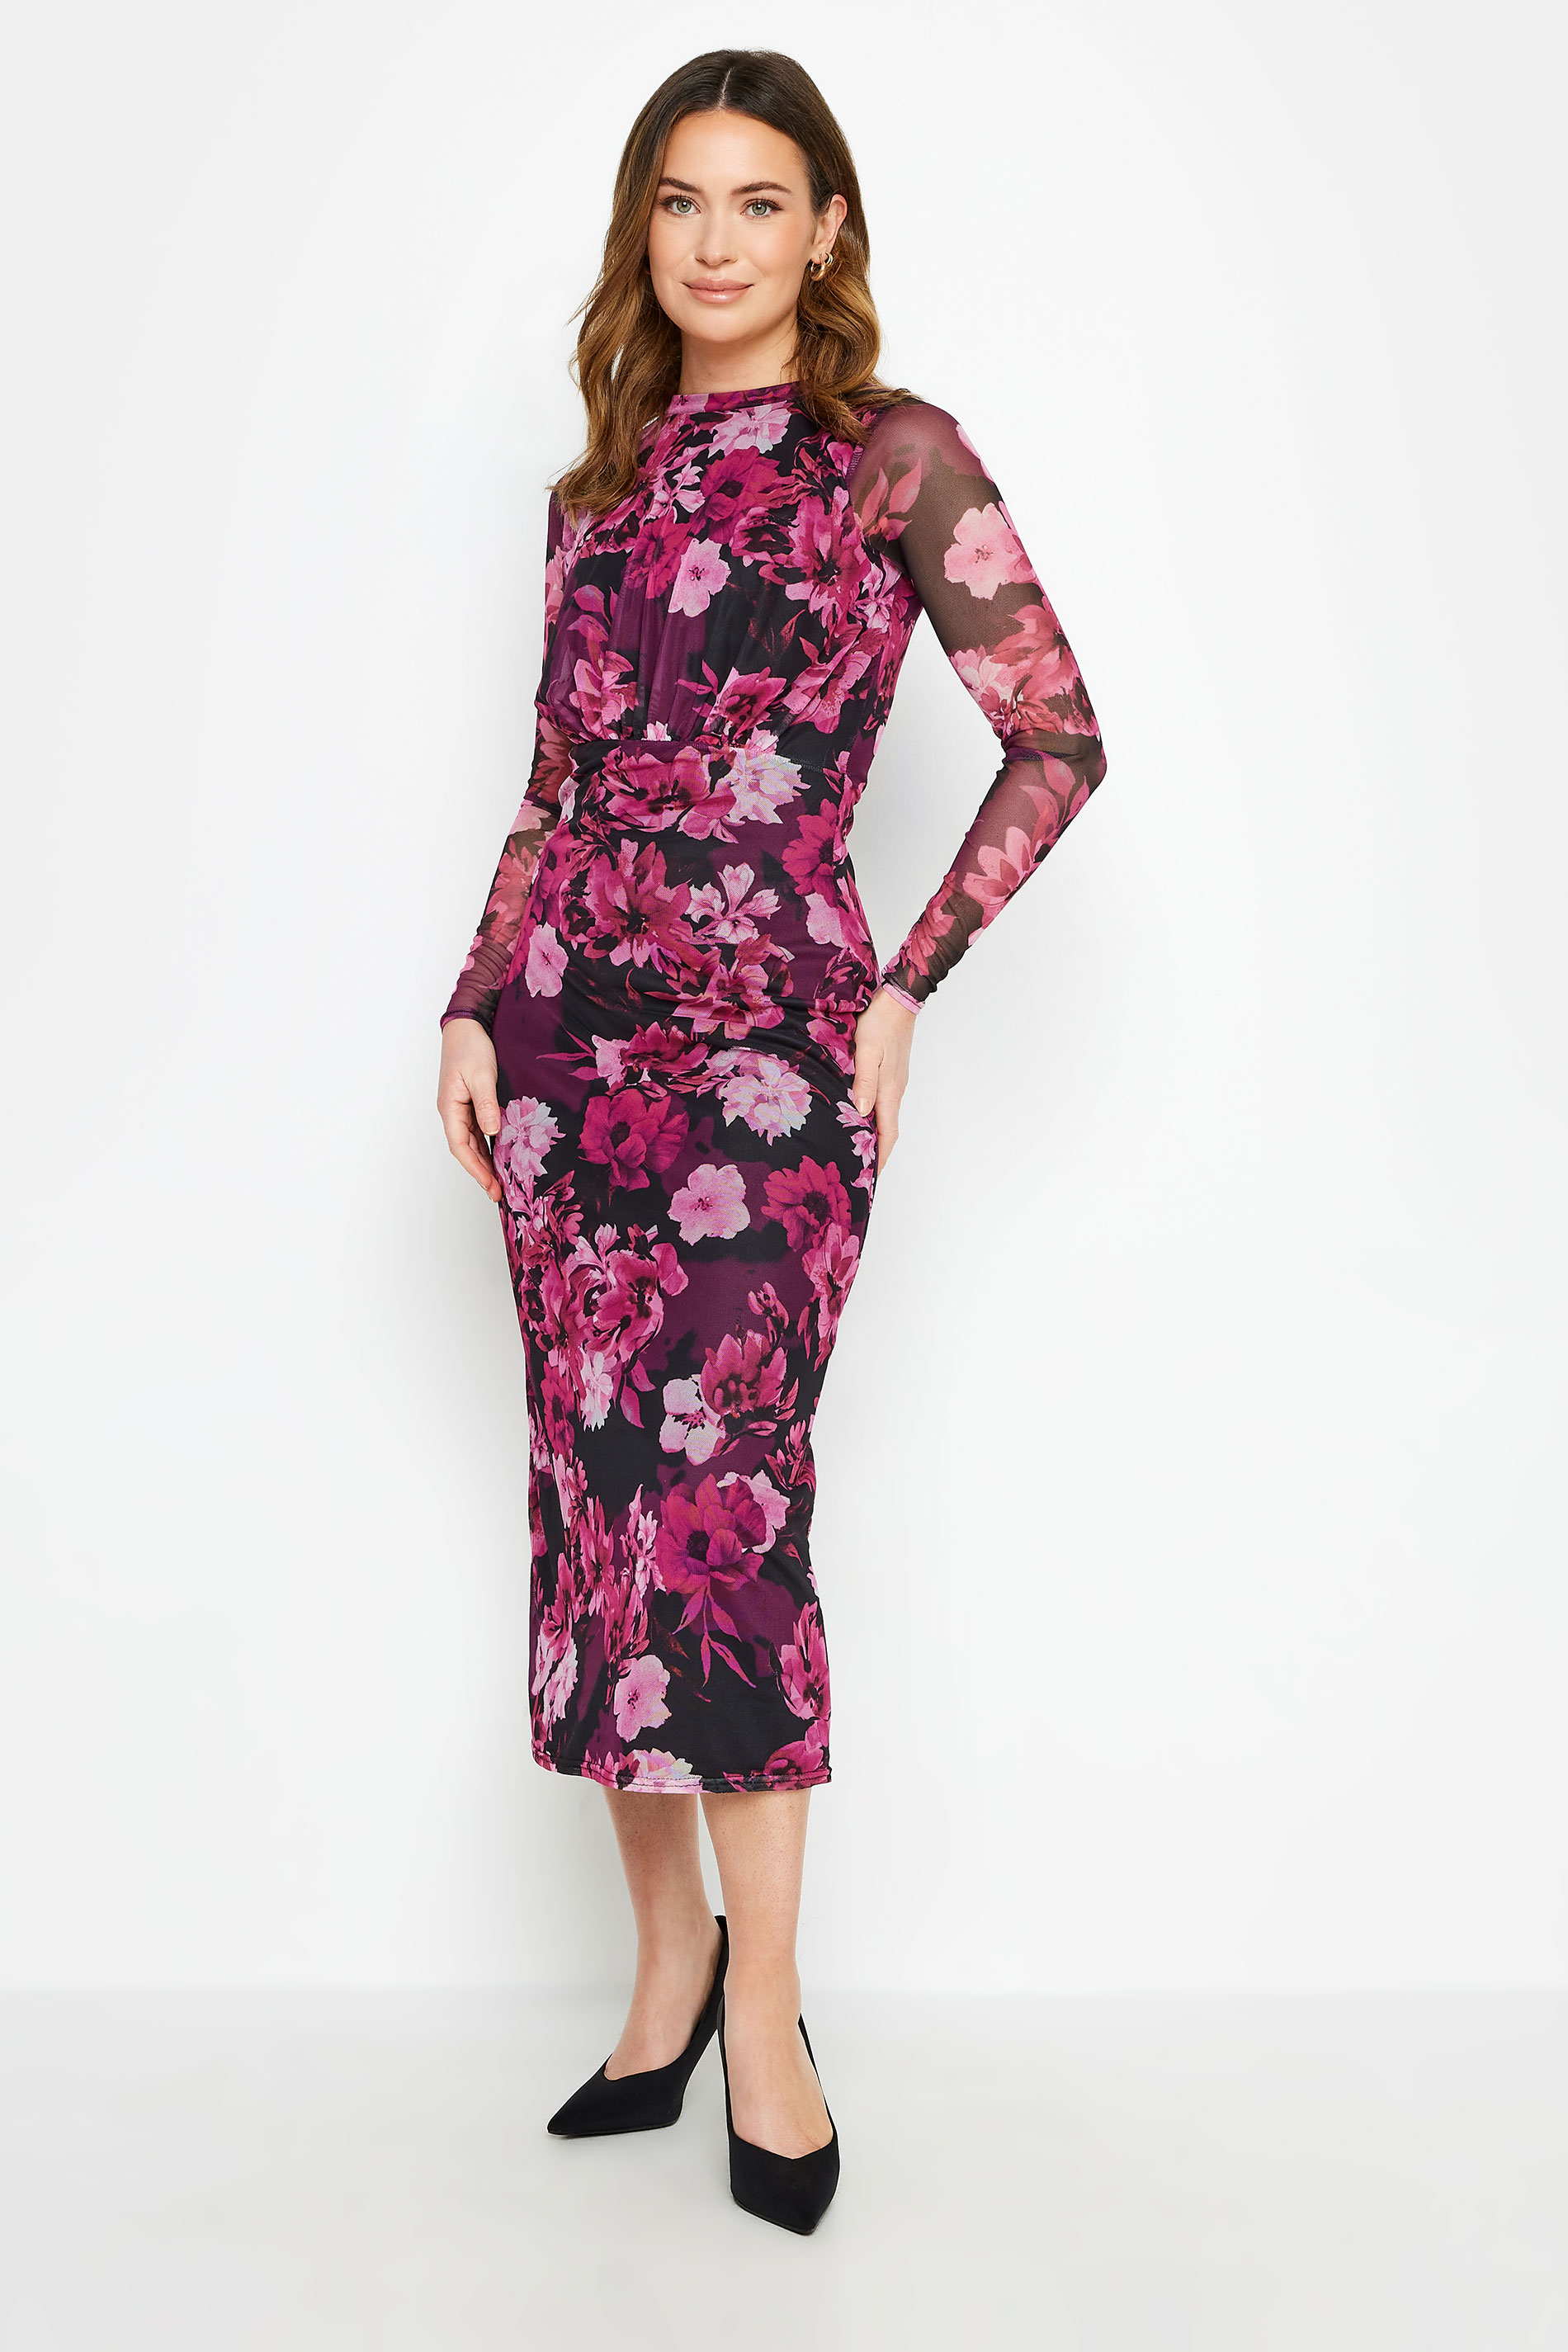 M&Co Petite Pink Floral Mesh Midi Dress | M&Co 1